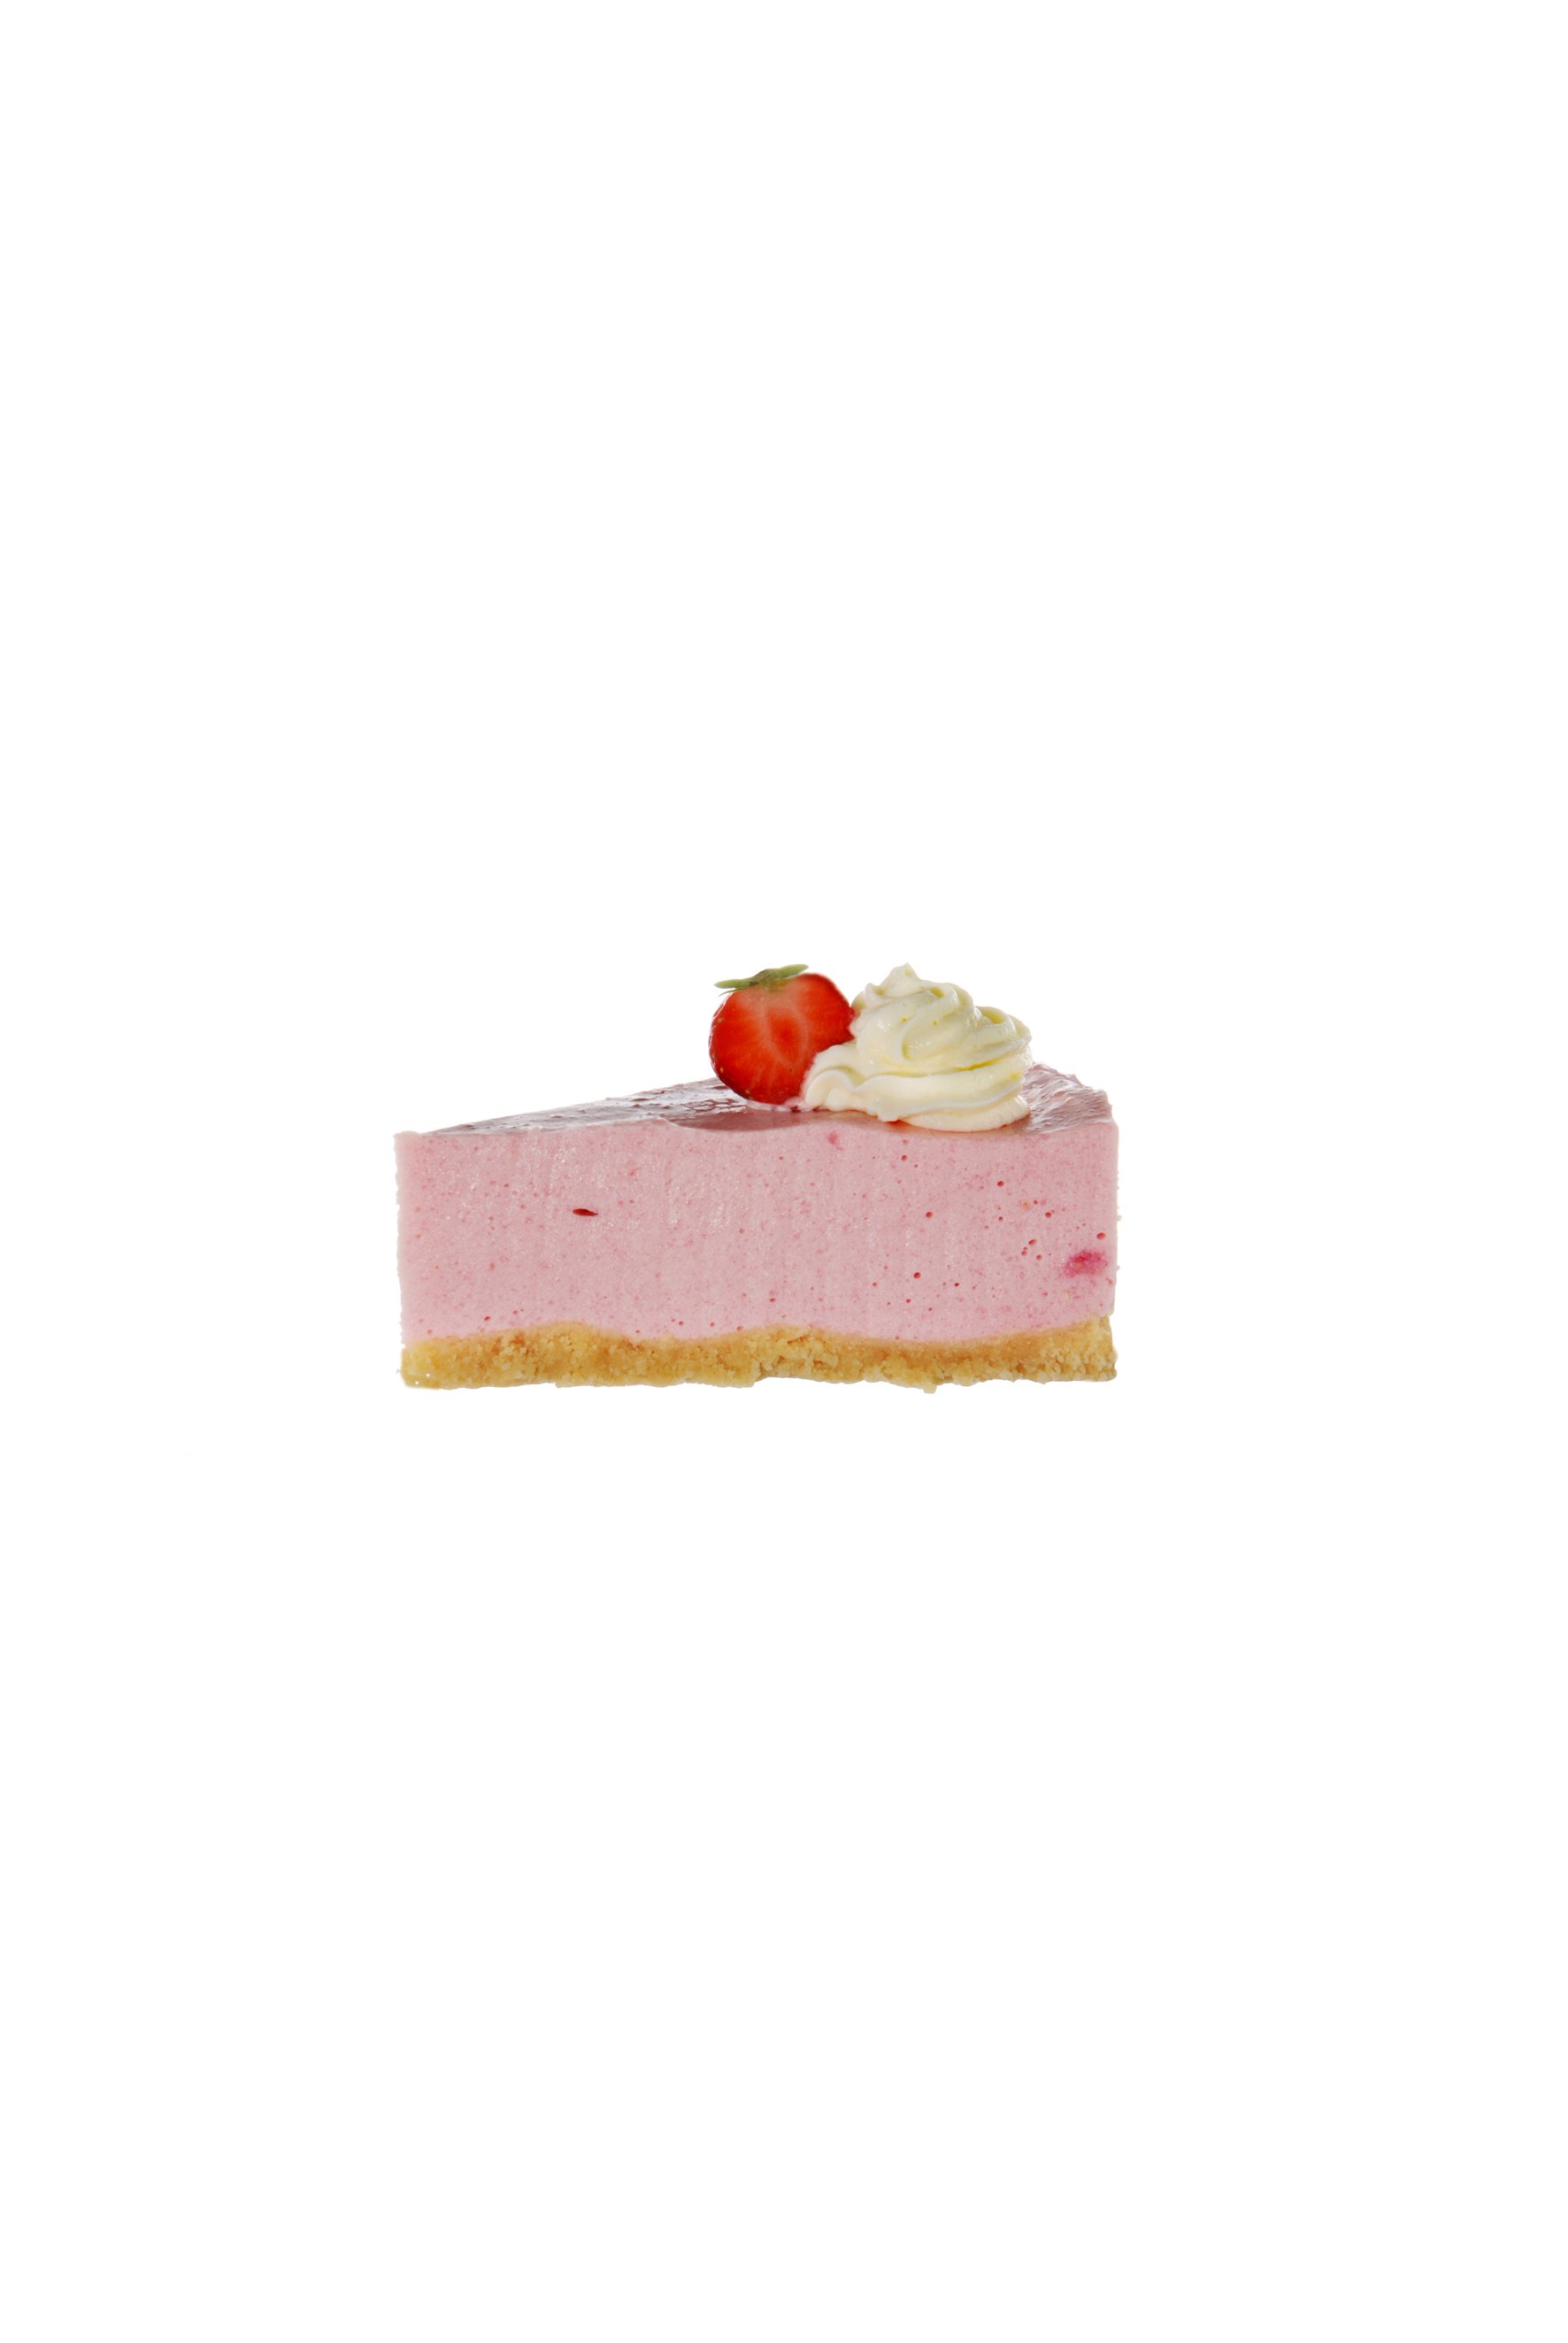 34 cheesecake - Christien Meindertsma, PIG 05049.jpg